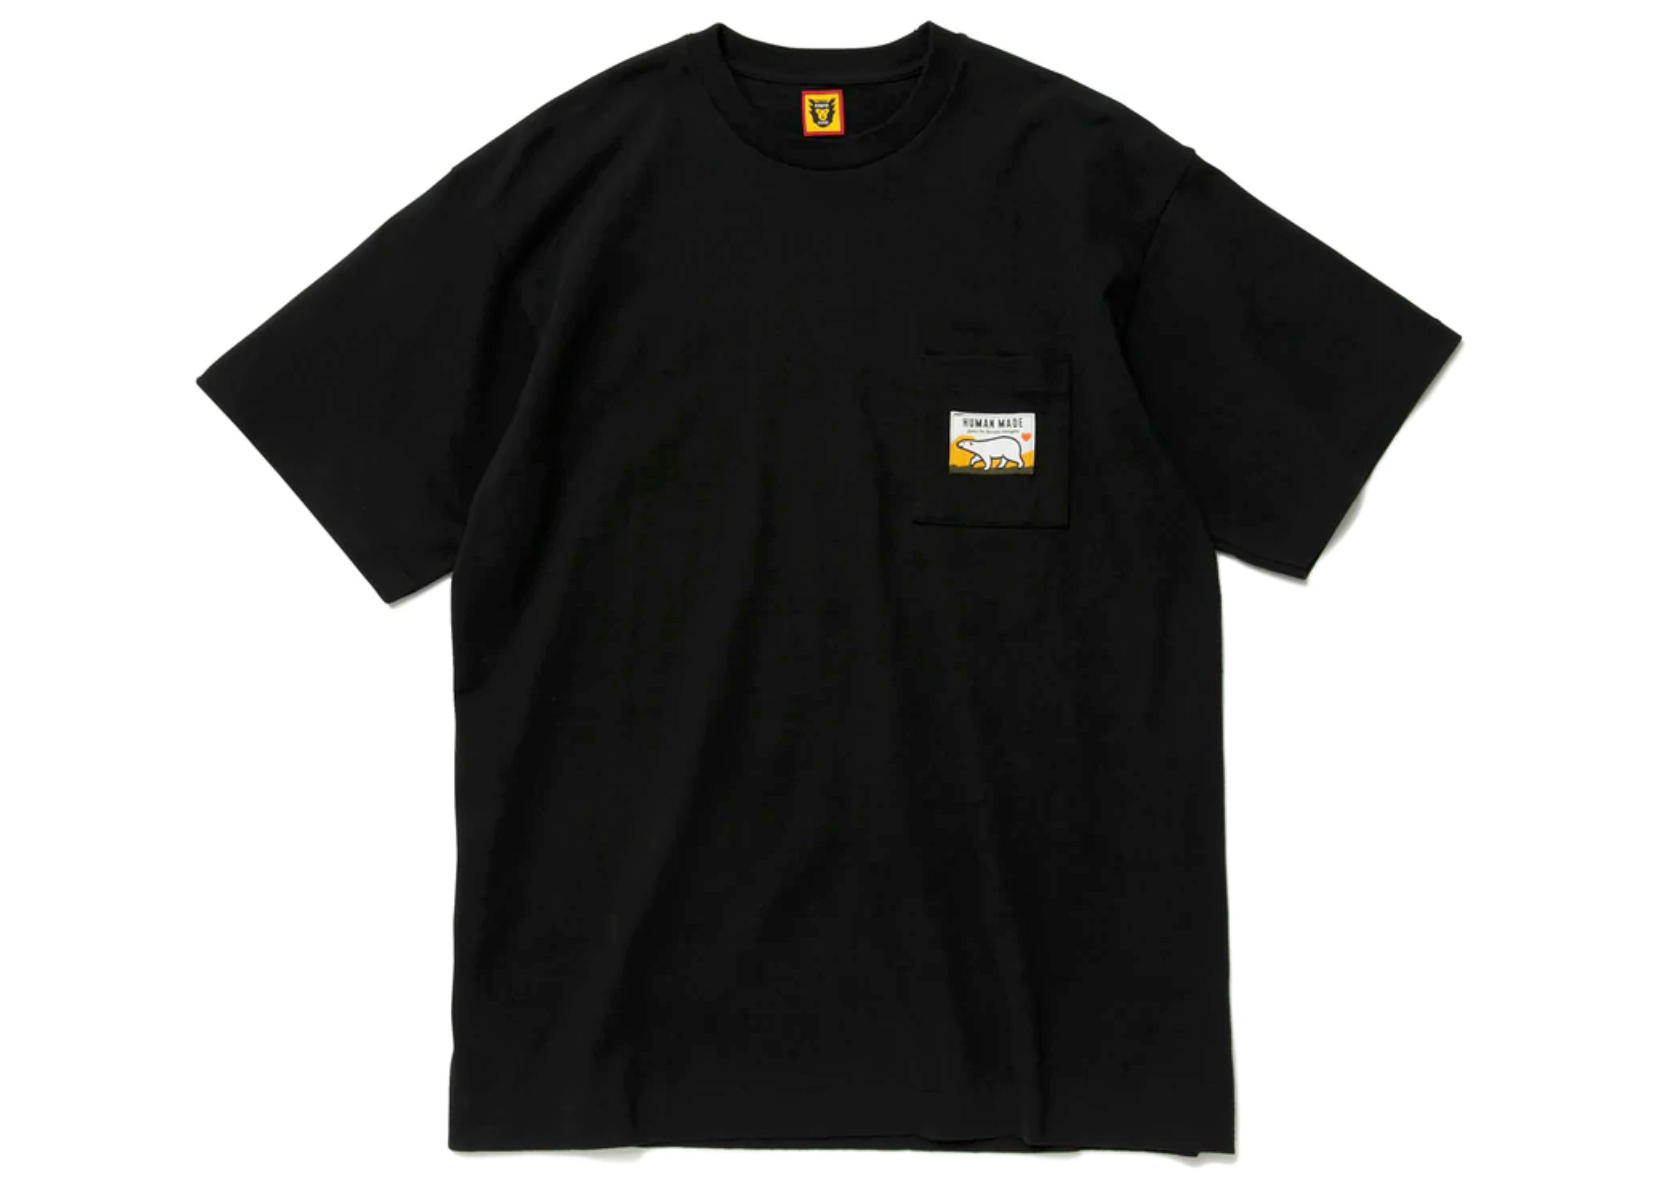 Human Made Polar Bear Pocket T-Shirt Black Men's - SS22 - GB